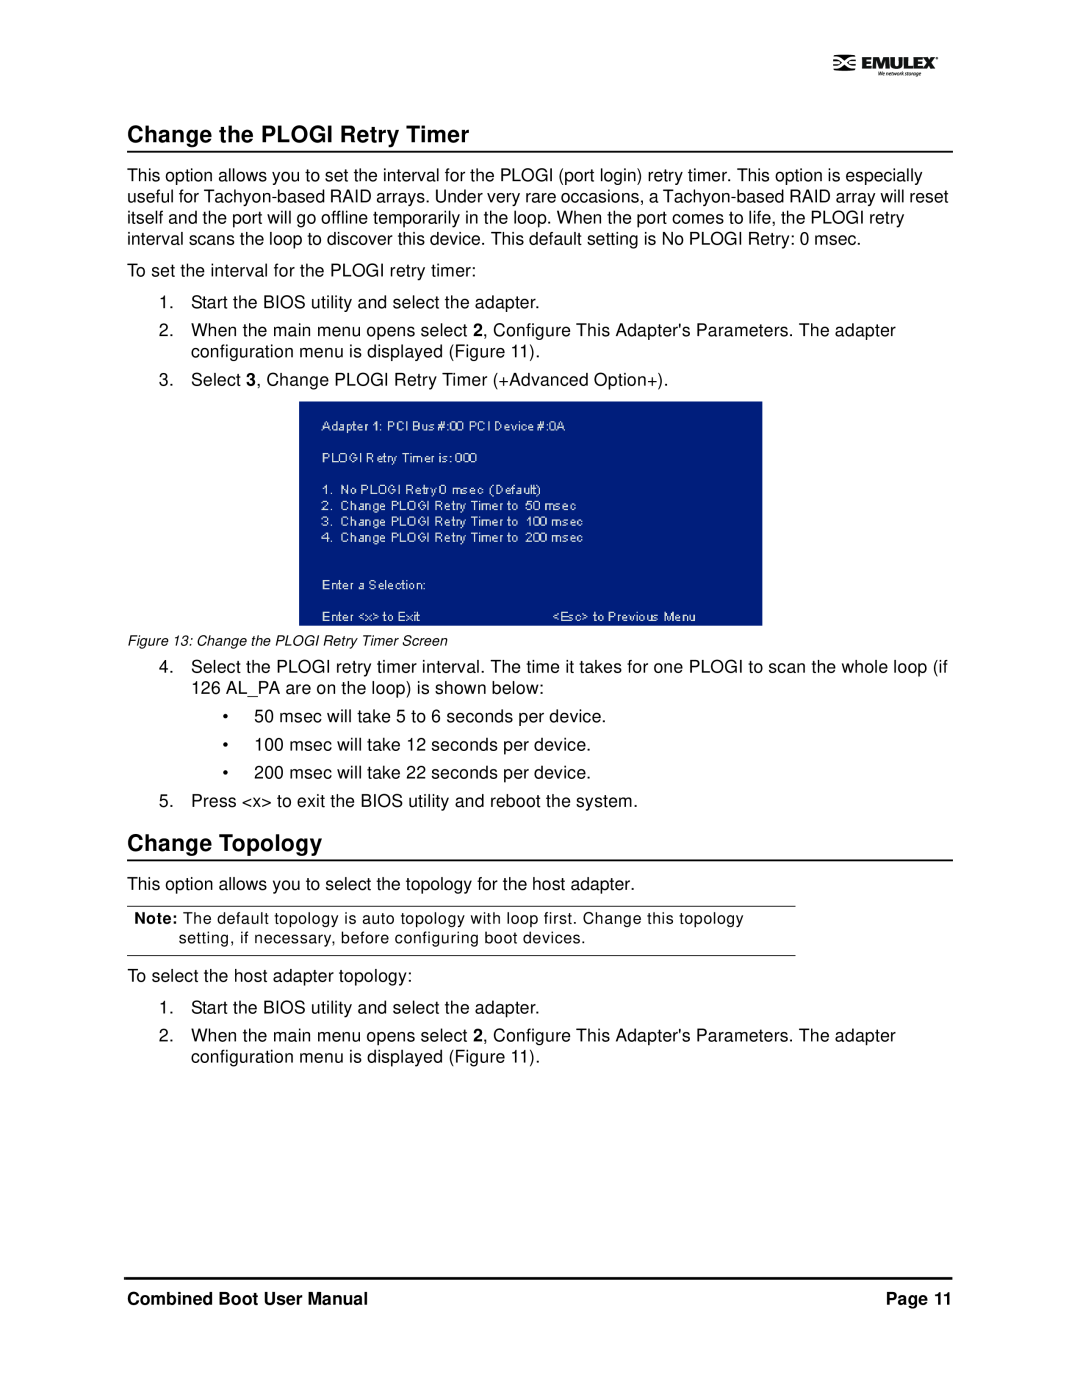 IBM 5.01 user manual Change Topology, Page, Change the PLOGI Retry Timer Screen 